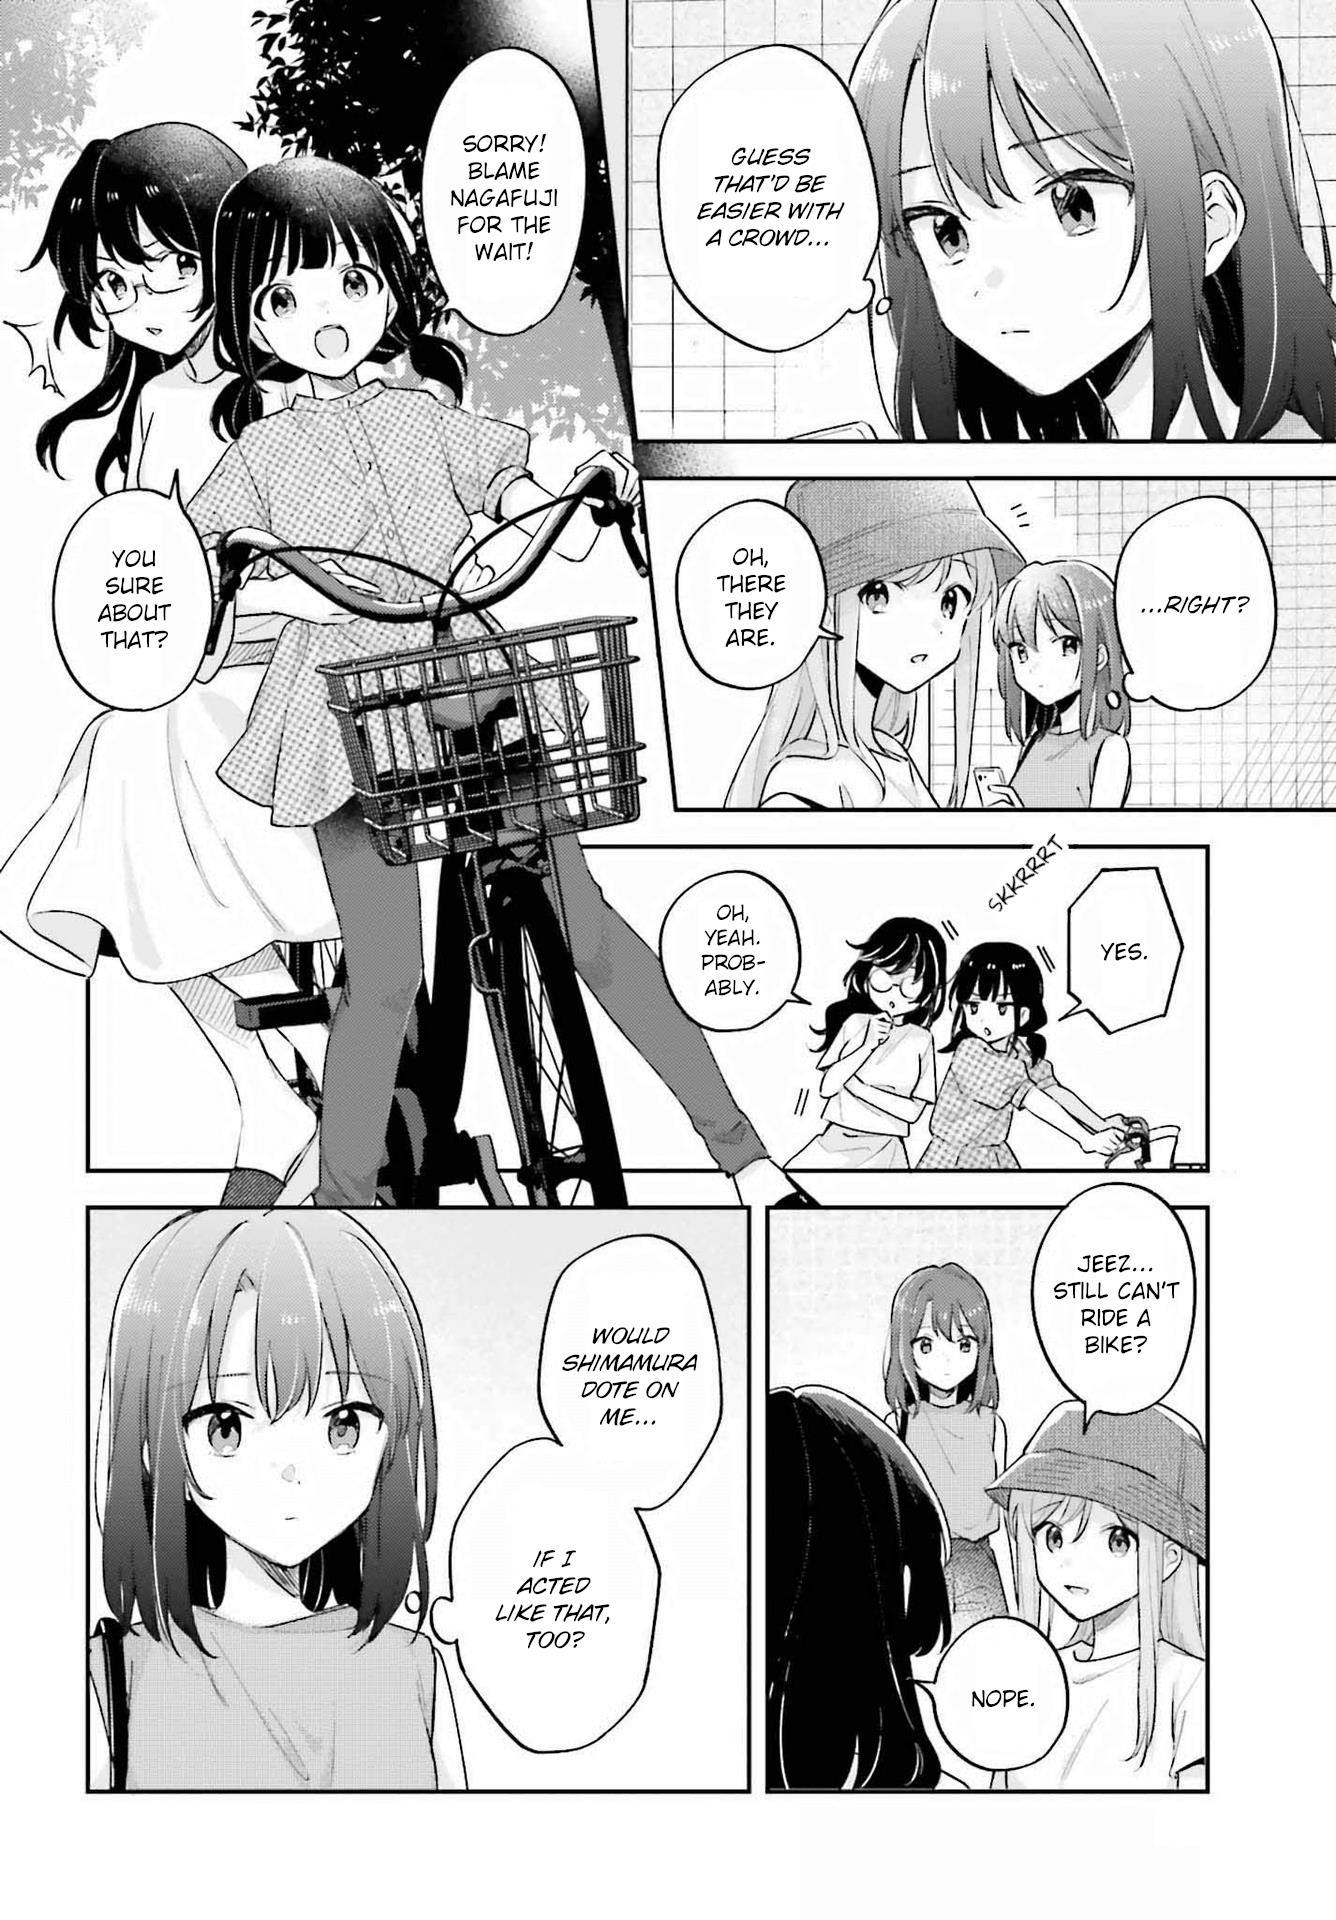 Adachi and Shimamura, Vol. 4 (manga), Manga